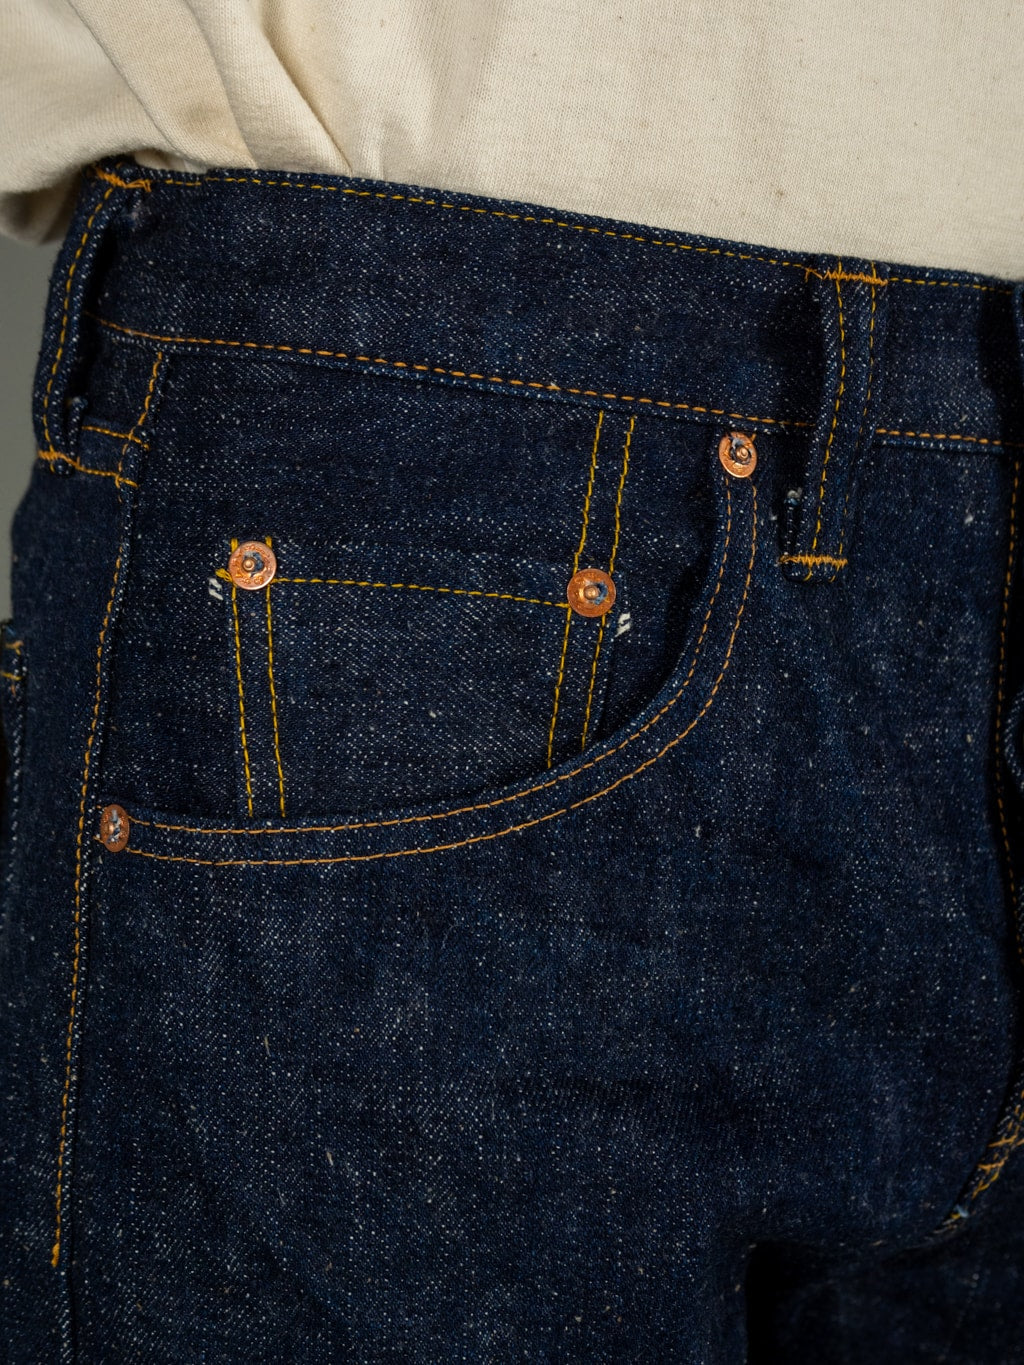 Samurai Jeans "Ai-Benkei" Natural Indigo Relax Tapered Jeans Front Pocket